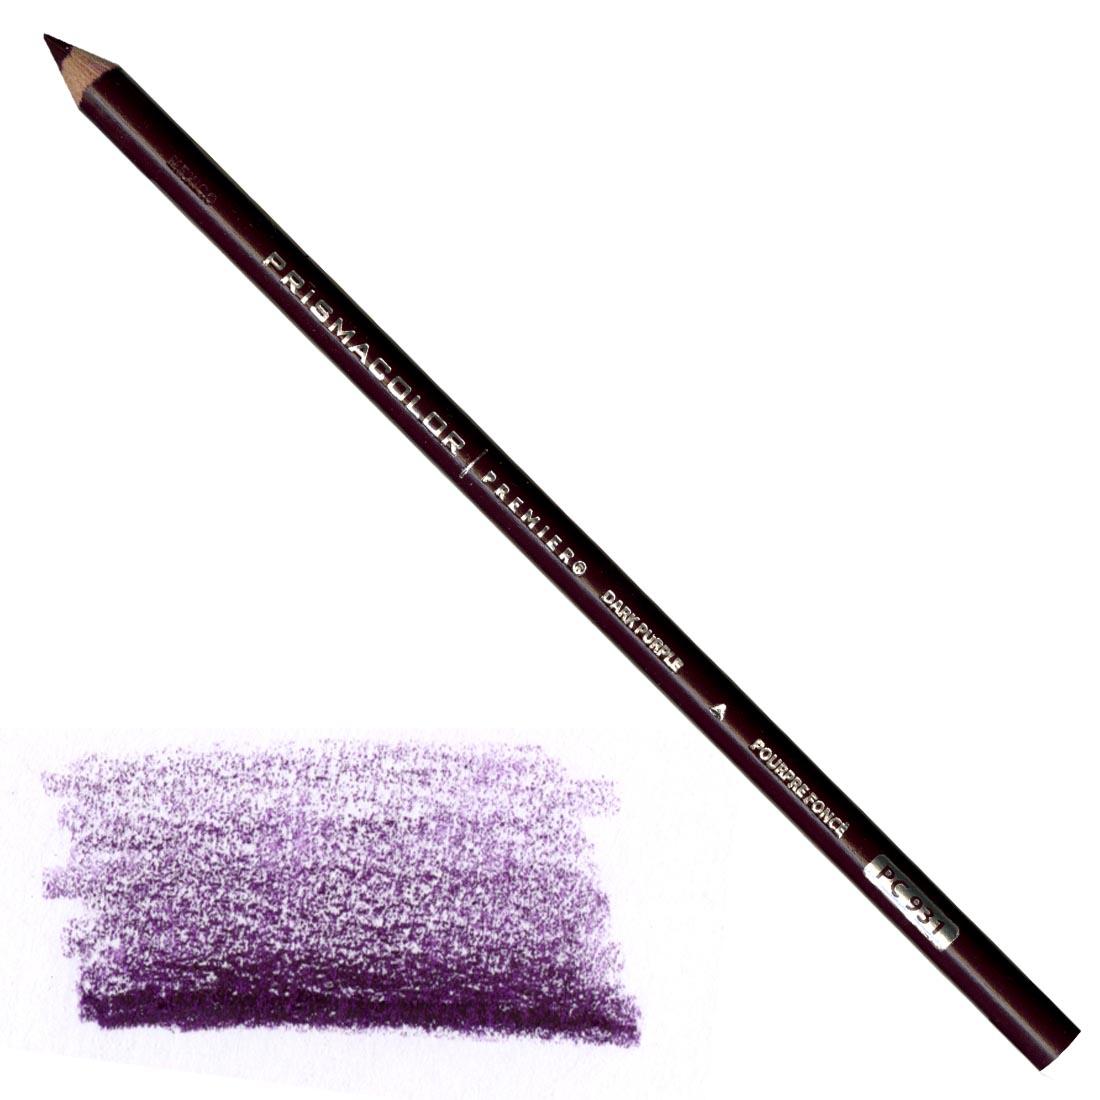 Dark Purple Prismacolor Premier Colored Pencil with a sample colored swatch